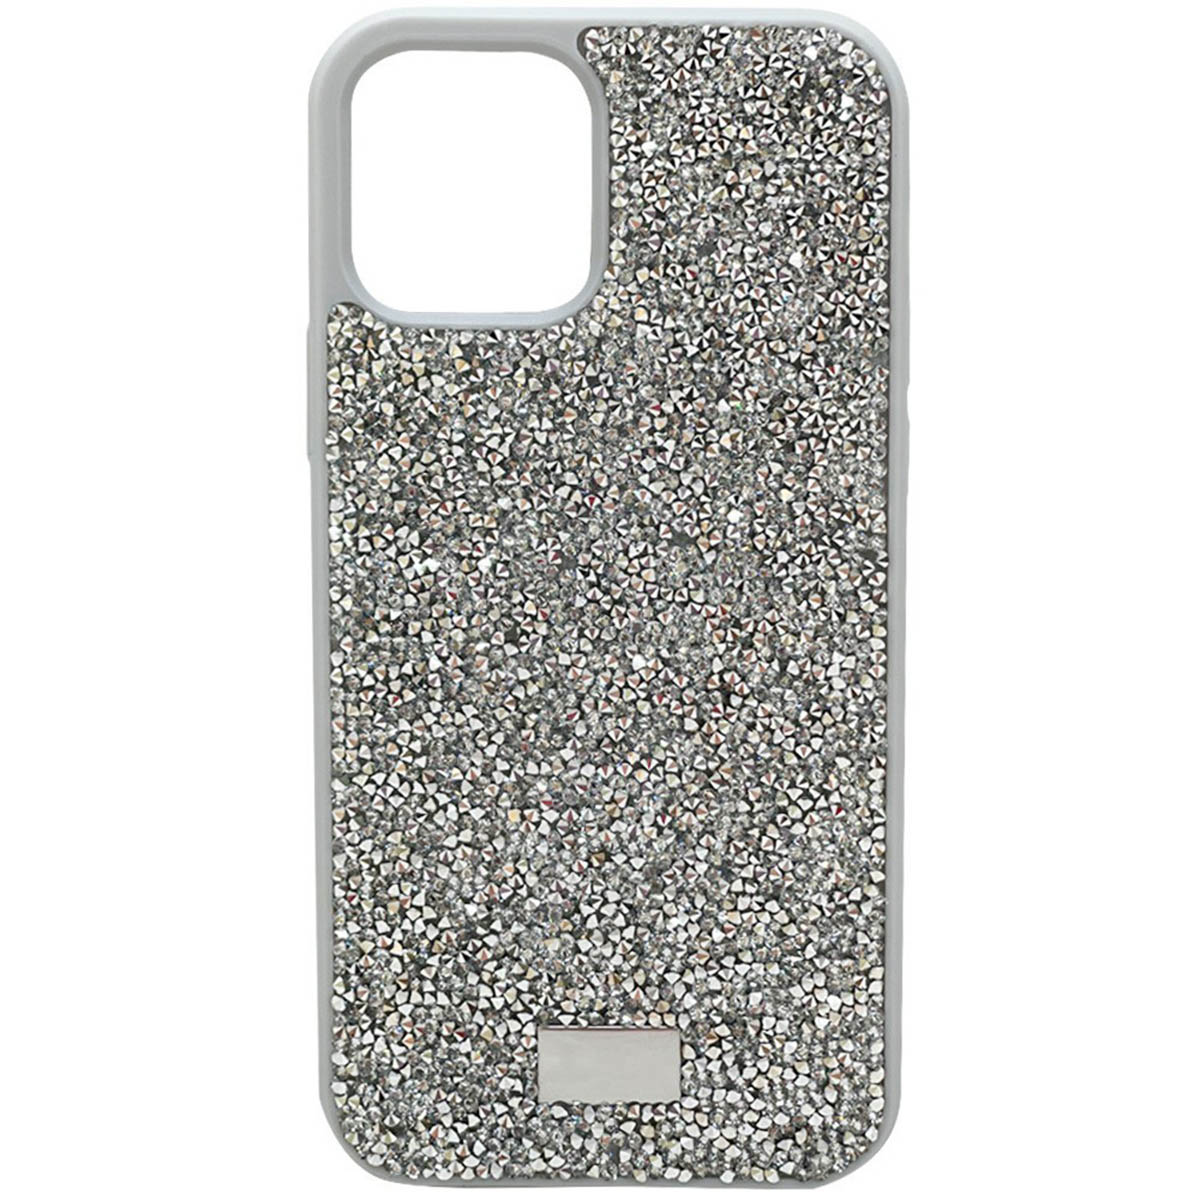 Чехол накладка для APPLE iPhone 12 mini (5.4"), стразы, цвет серебристый